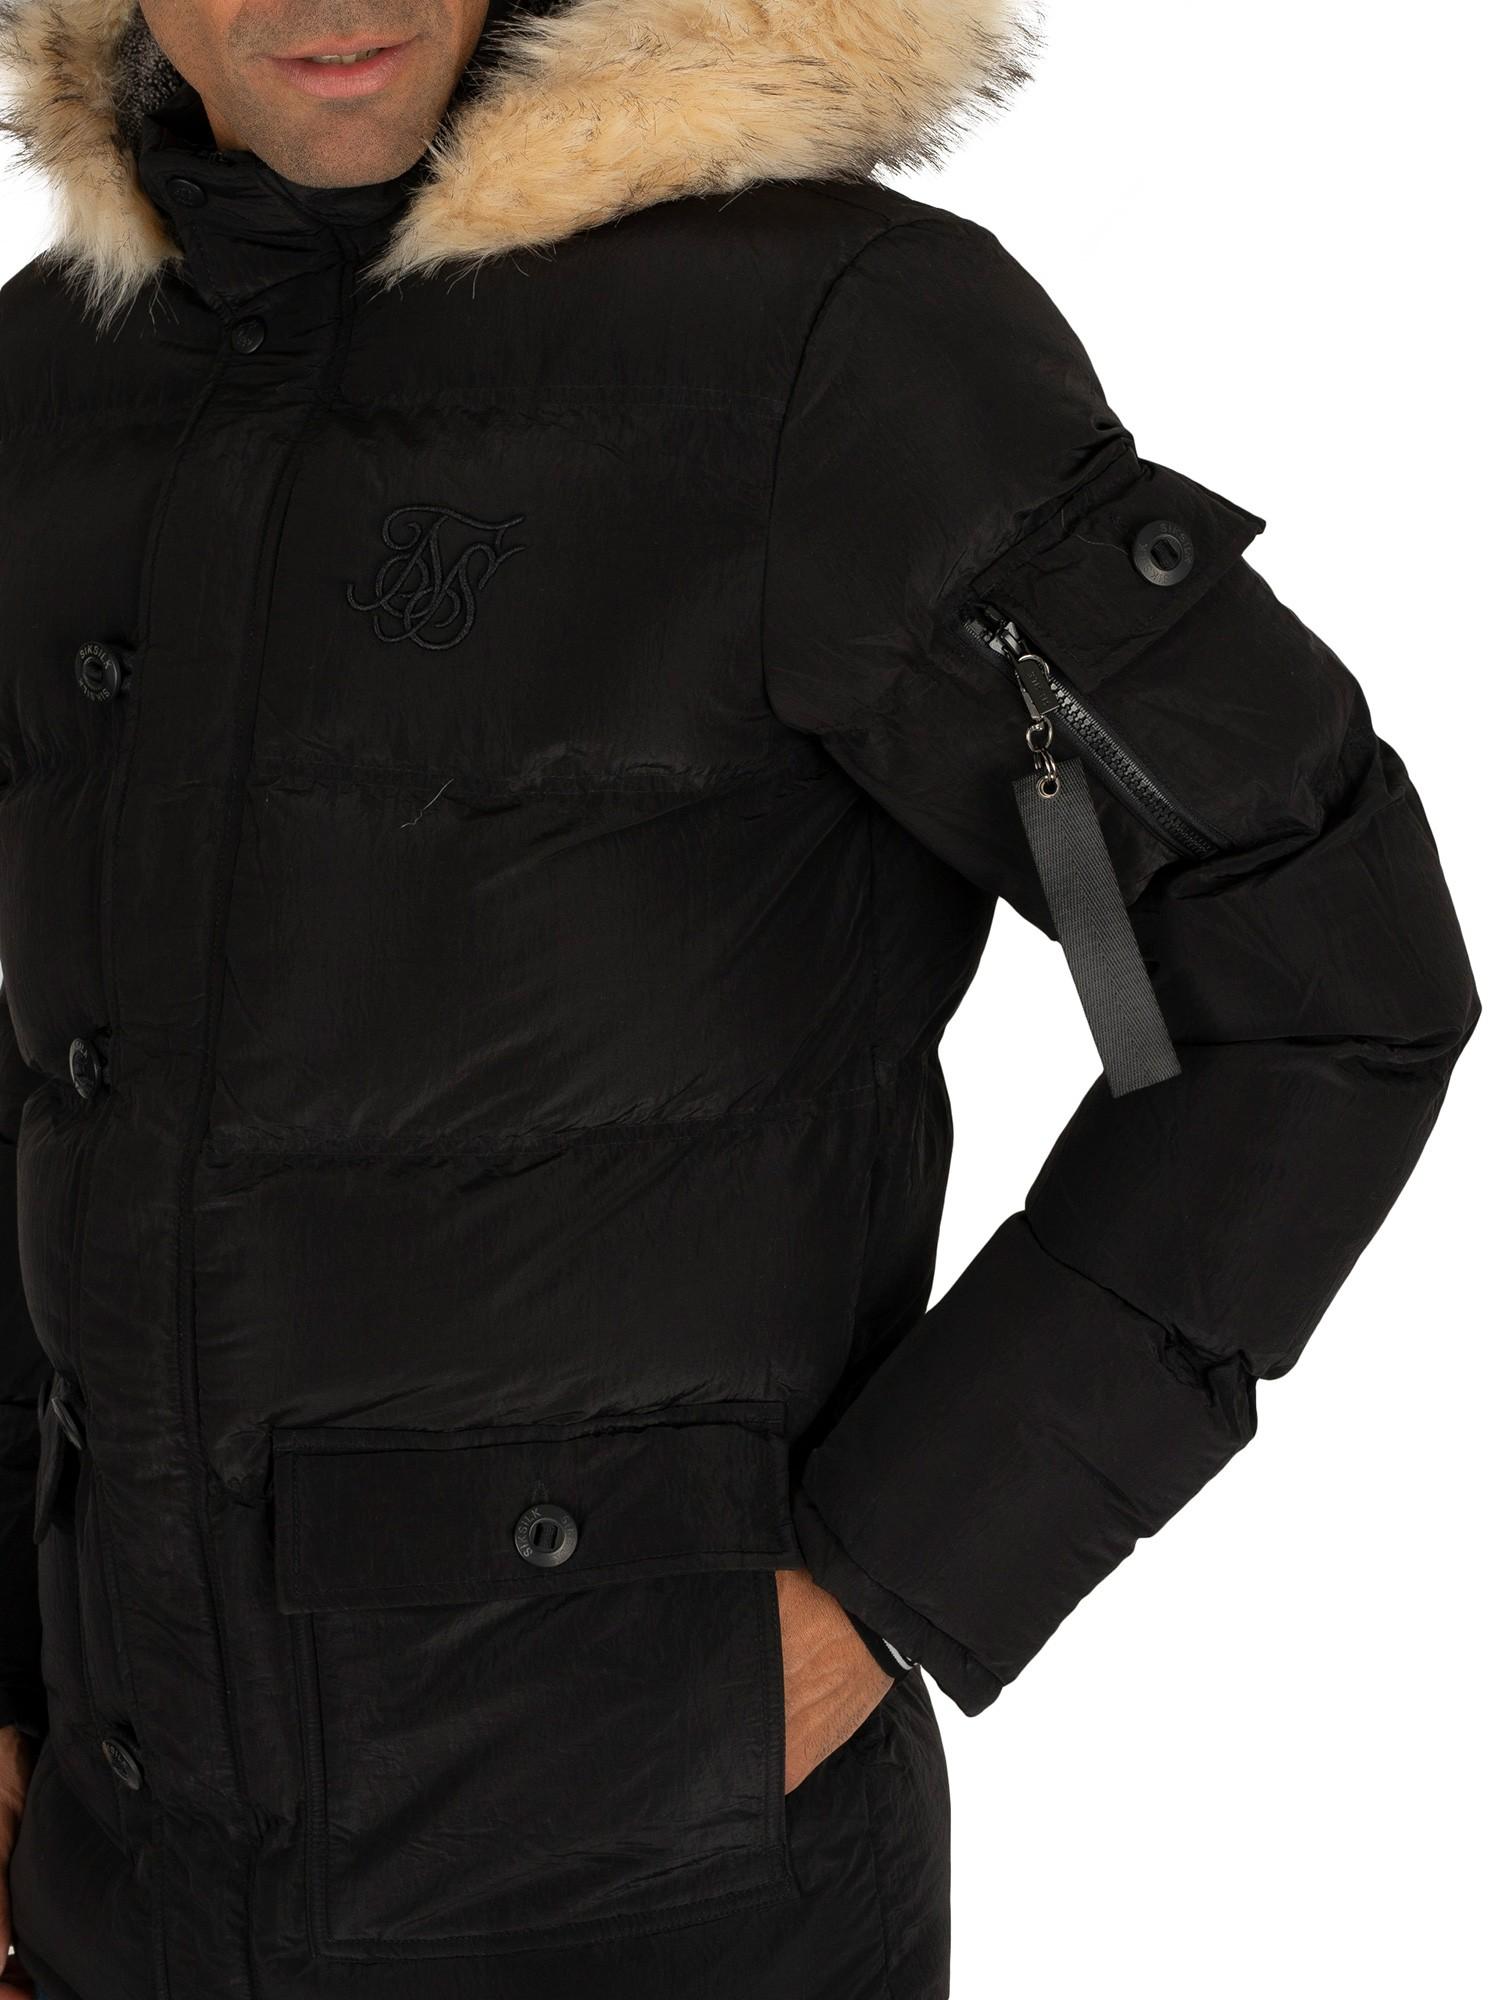 SIKSILK Silk Shiny Puffer Parka Jacket in Black for Men - Lyst